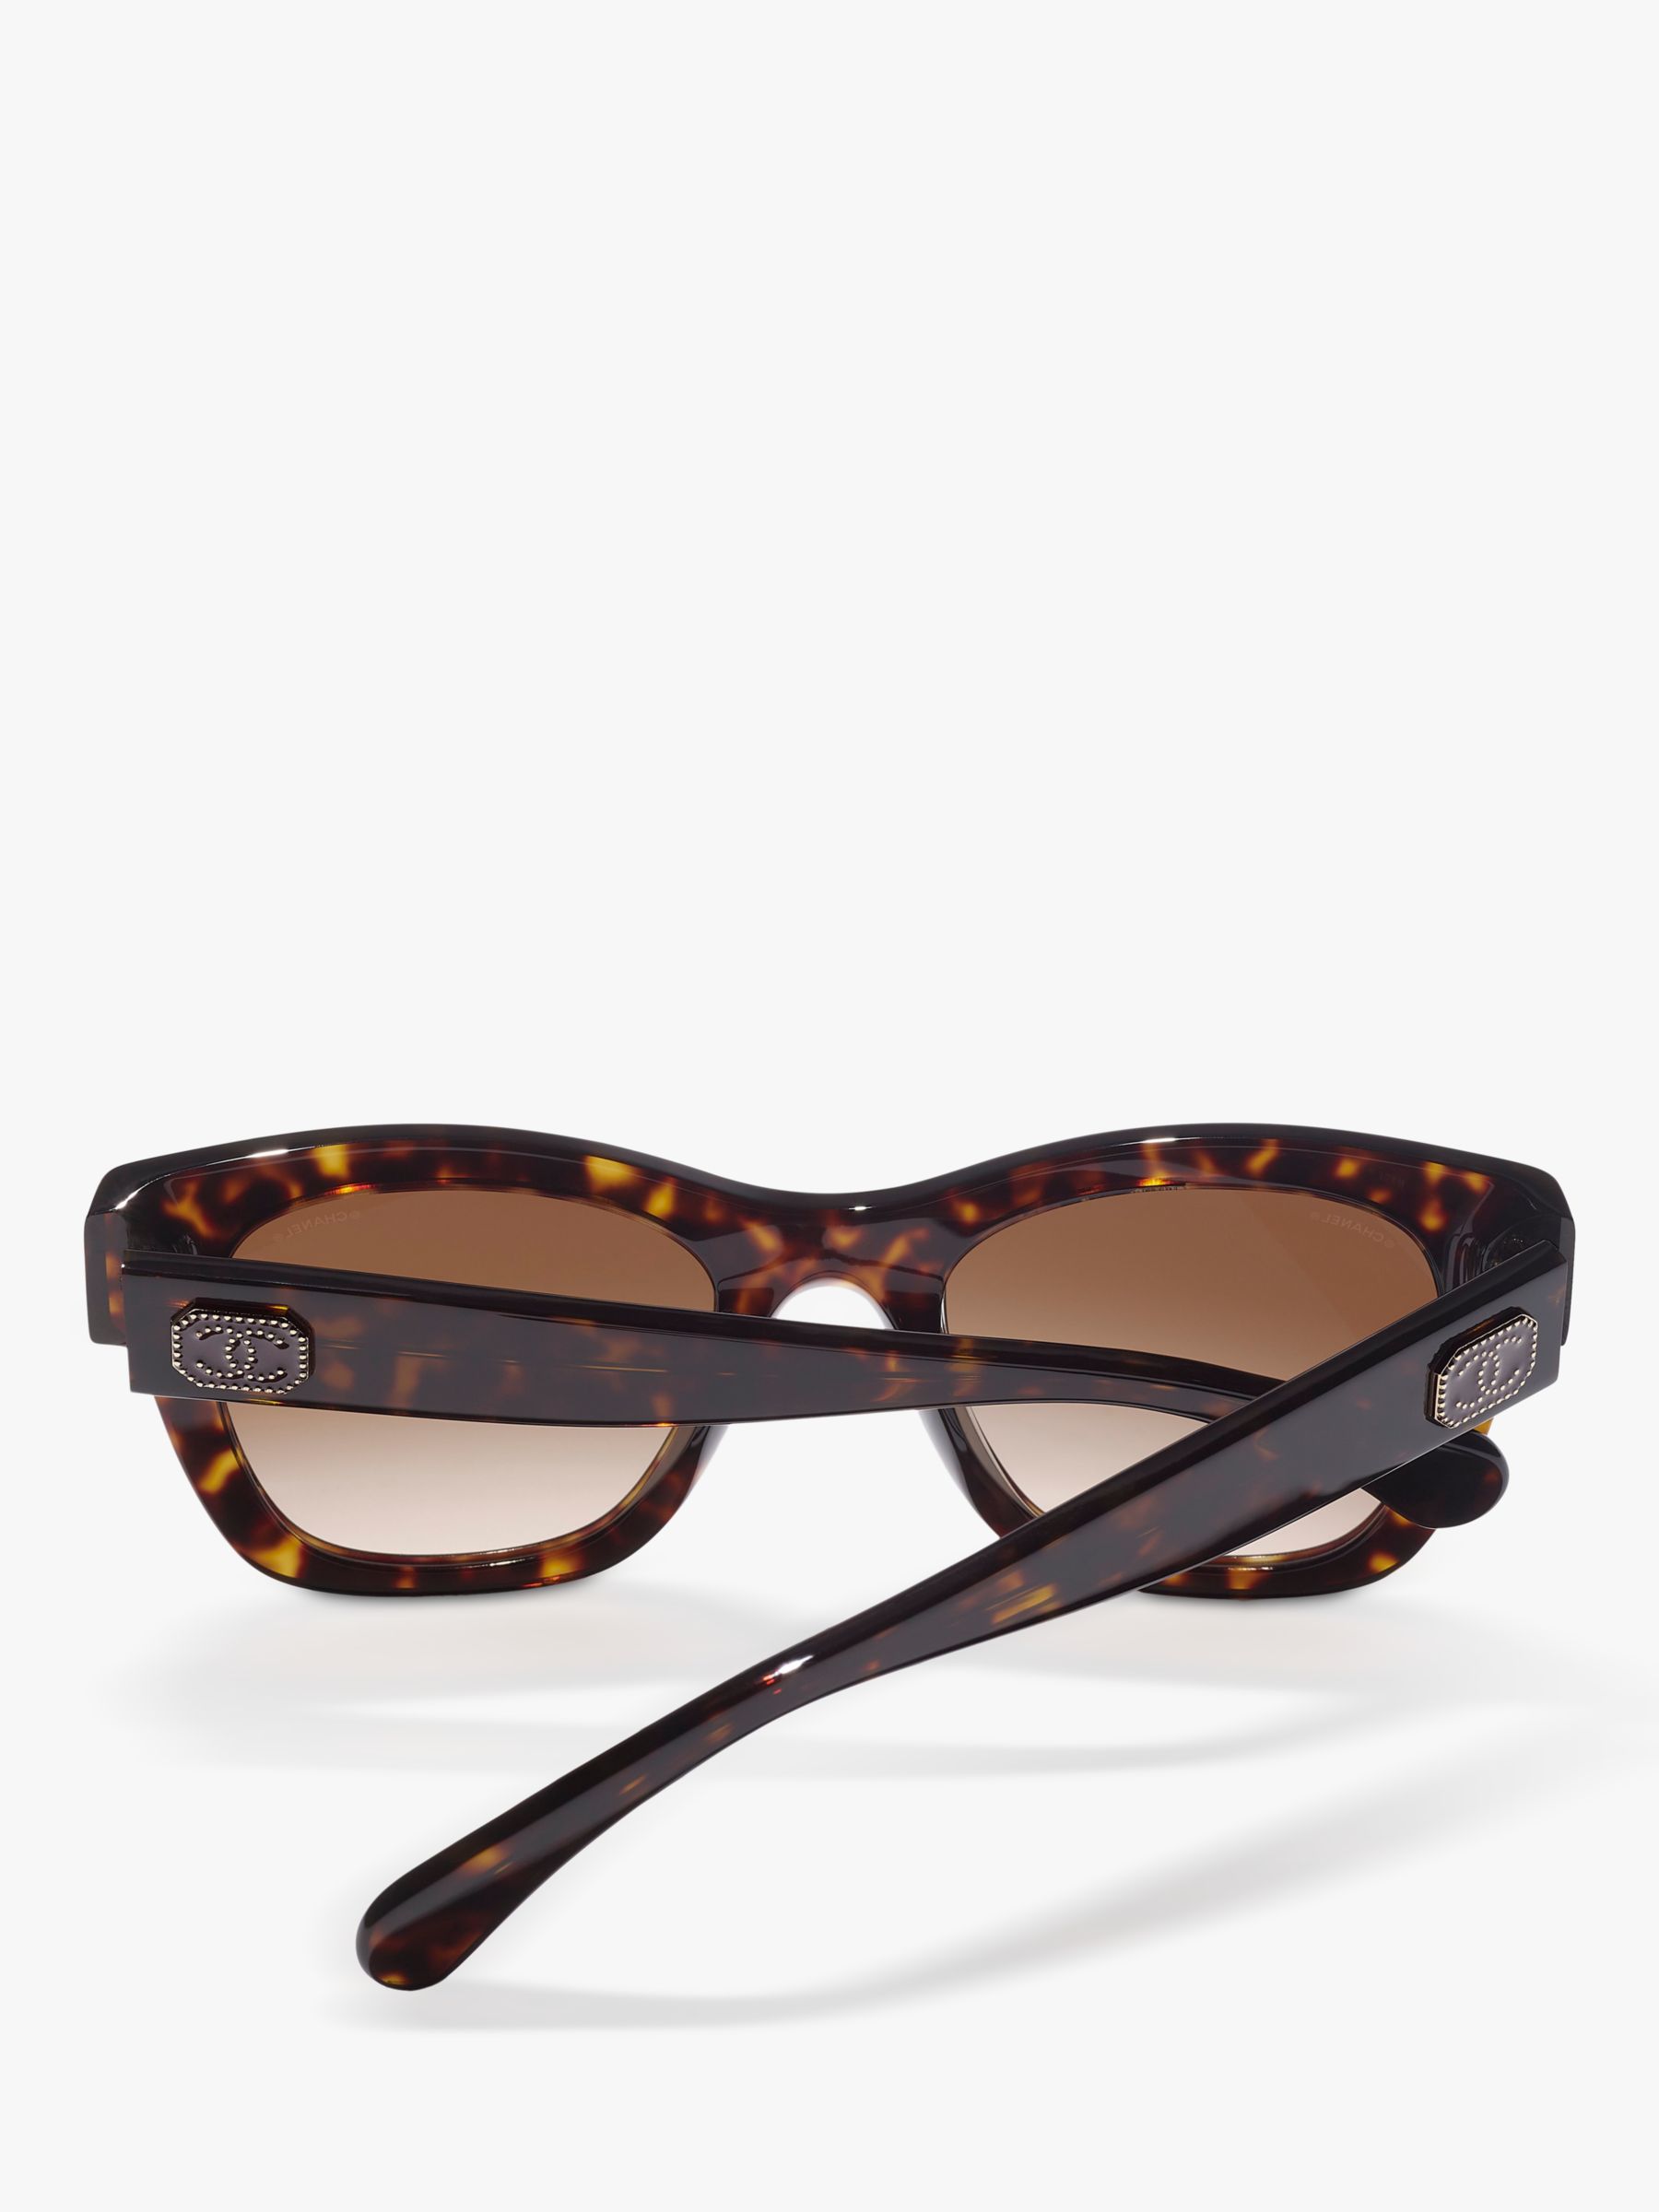 CHANEL Irregular Sunglasses CH5478 Dark Havana/Brown Gradient at